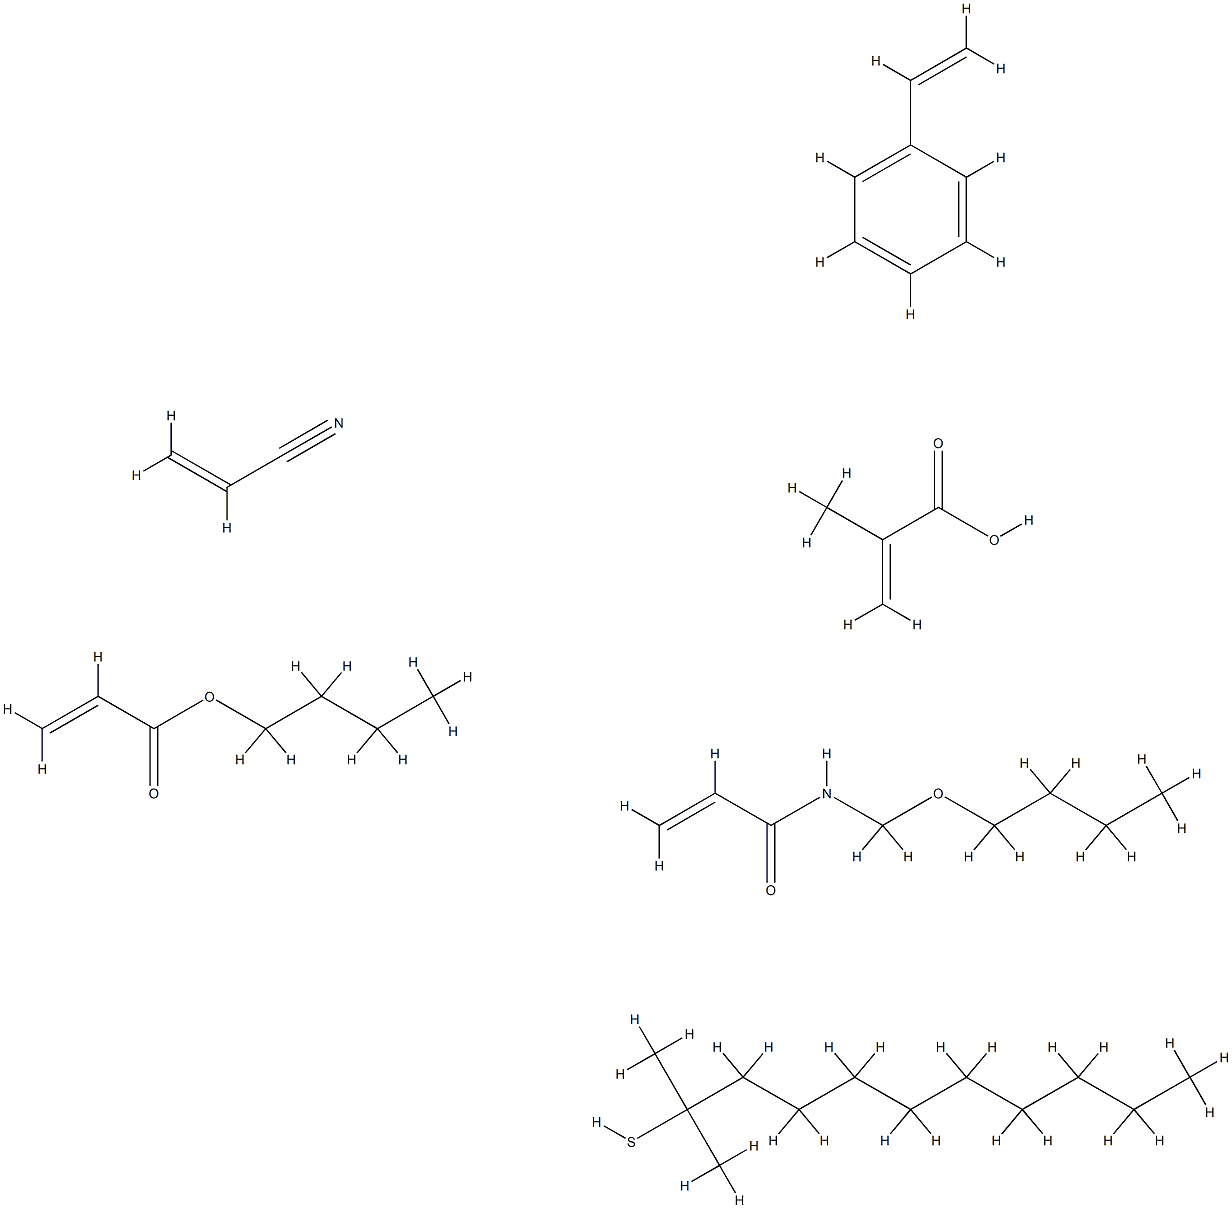 2-Propenoic acid, 2-methyl-, telomer with N-(butoxymethyl)-2-propenamide, butyl 2-propenoate, tert-dodecanethiol, ethenylbenzene and 2-propenenitrile|